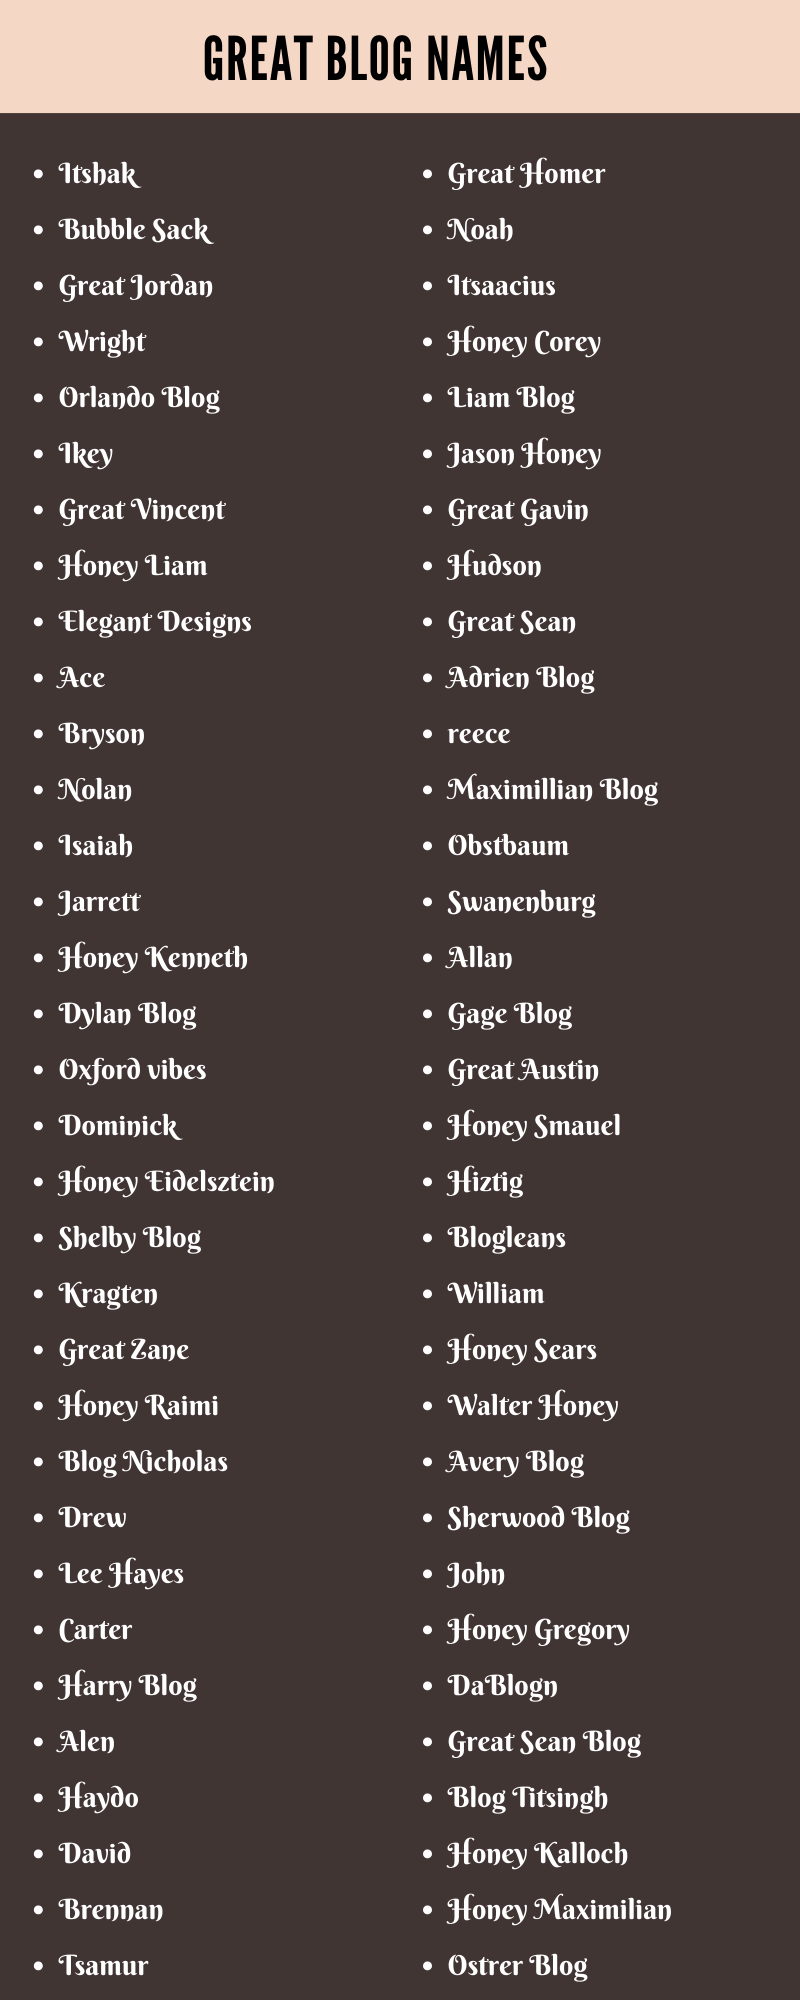 Great Blog Names